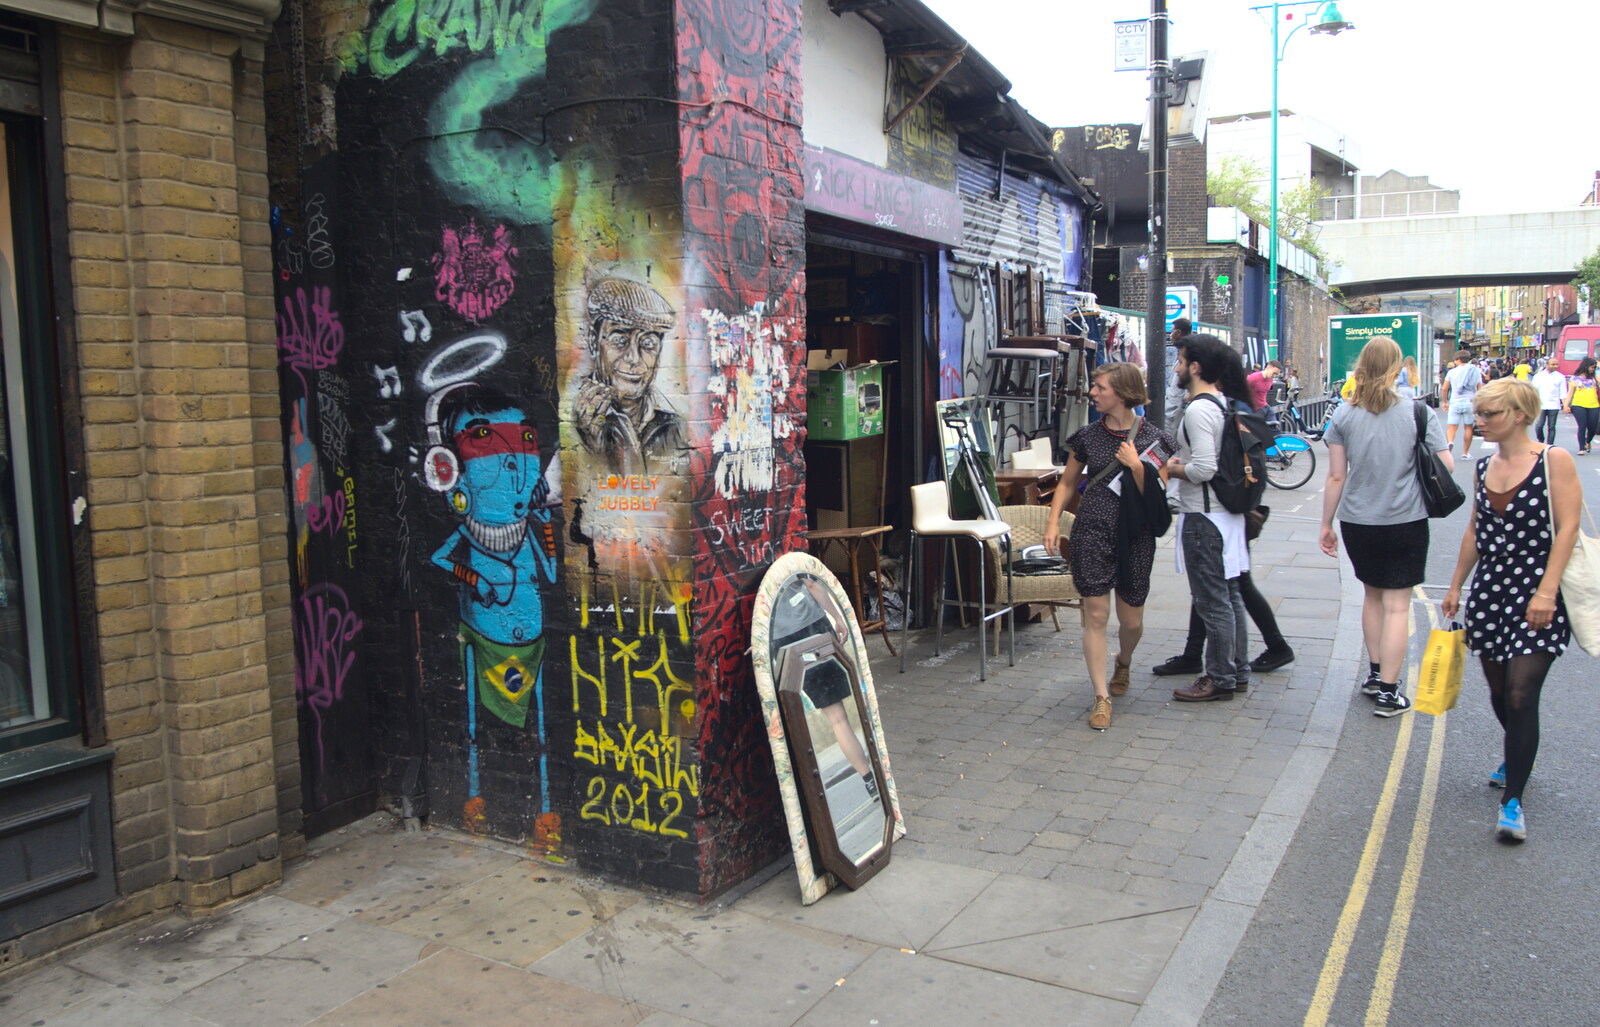 More street art from Spitalfields and Brick Lane Street Art, Whitechapel, London - 10th August 2013